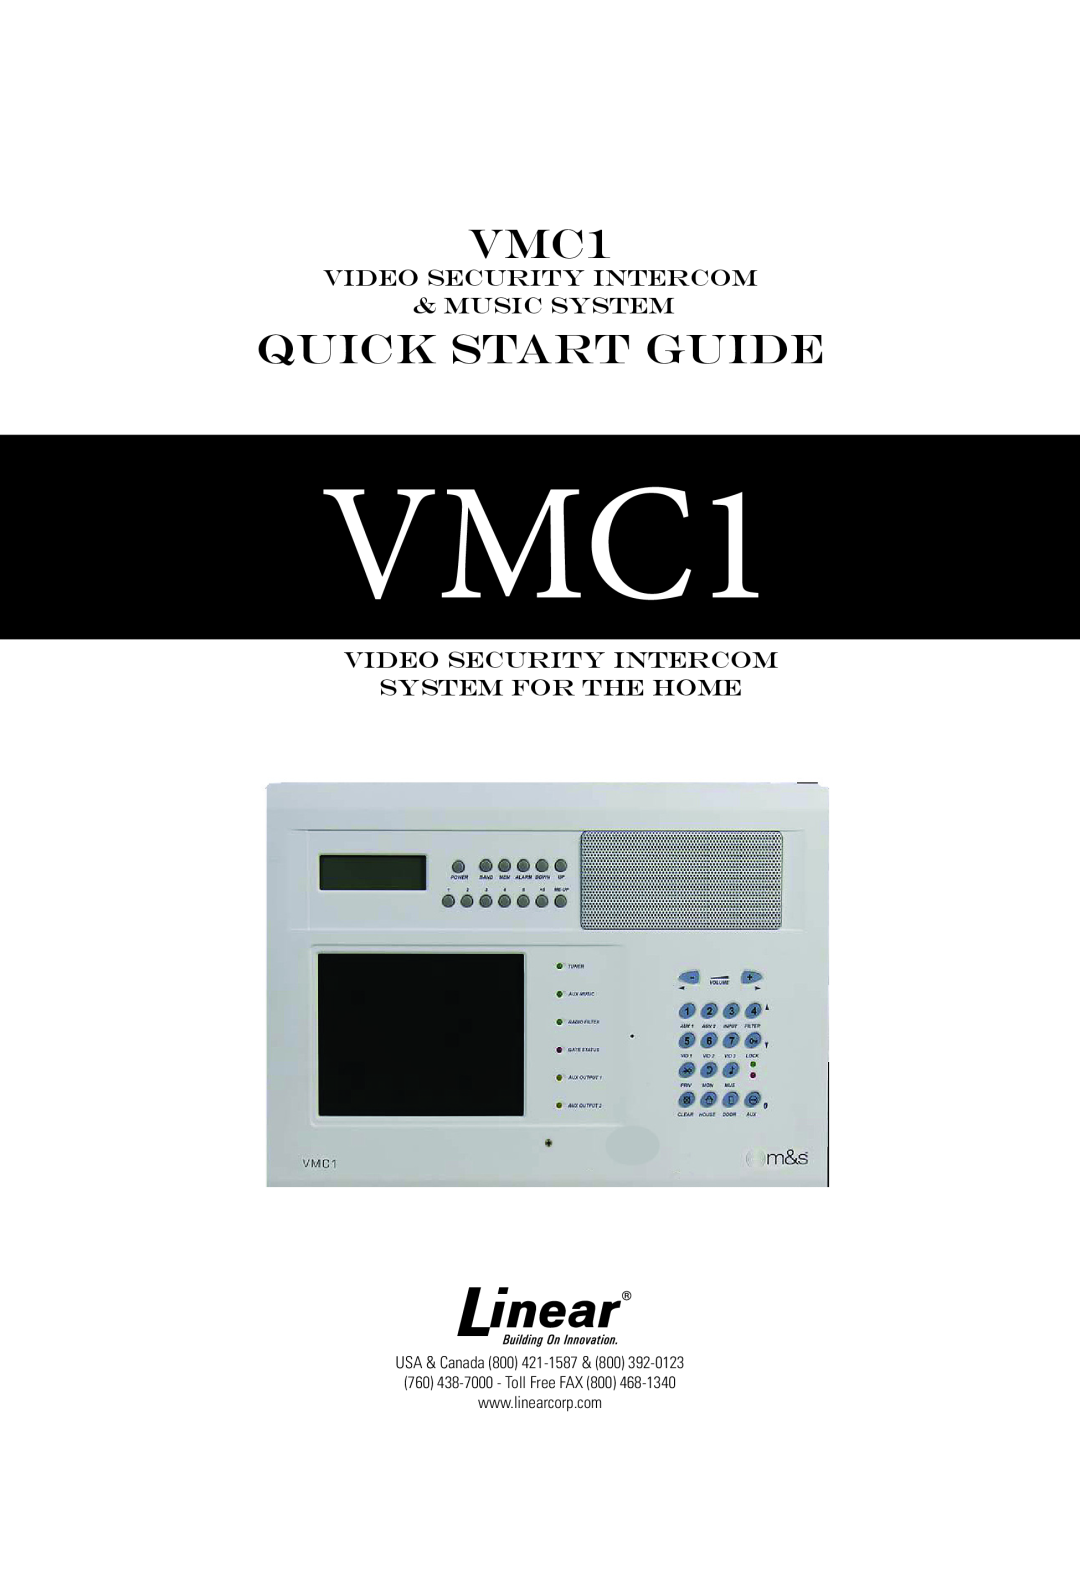 Linear VMC1 quick start Quick Start Guide, Video Security Intercom & Music System, USA & Canada 